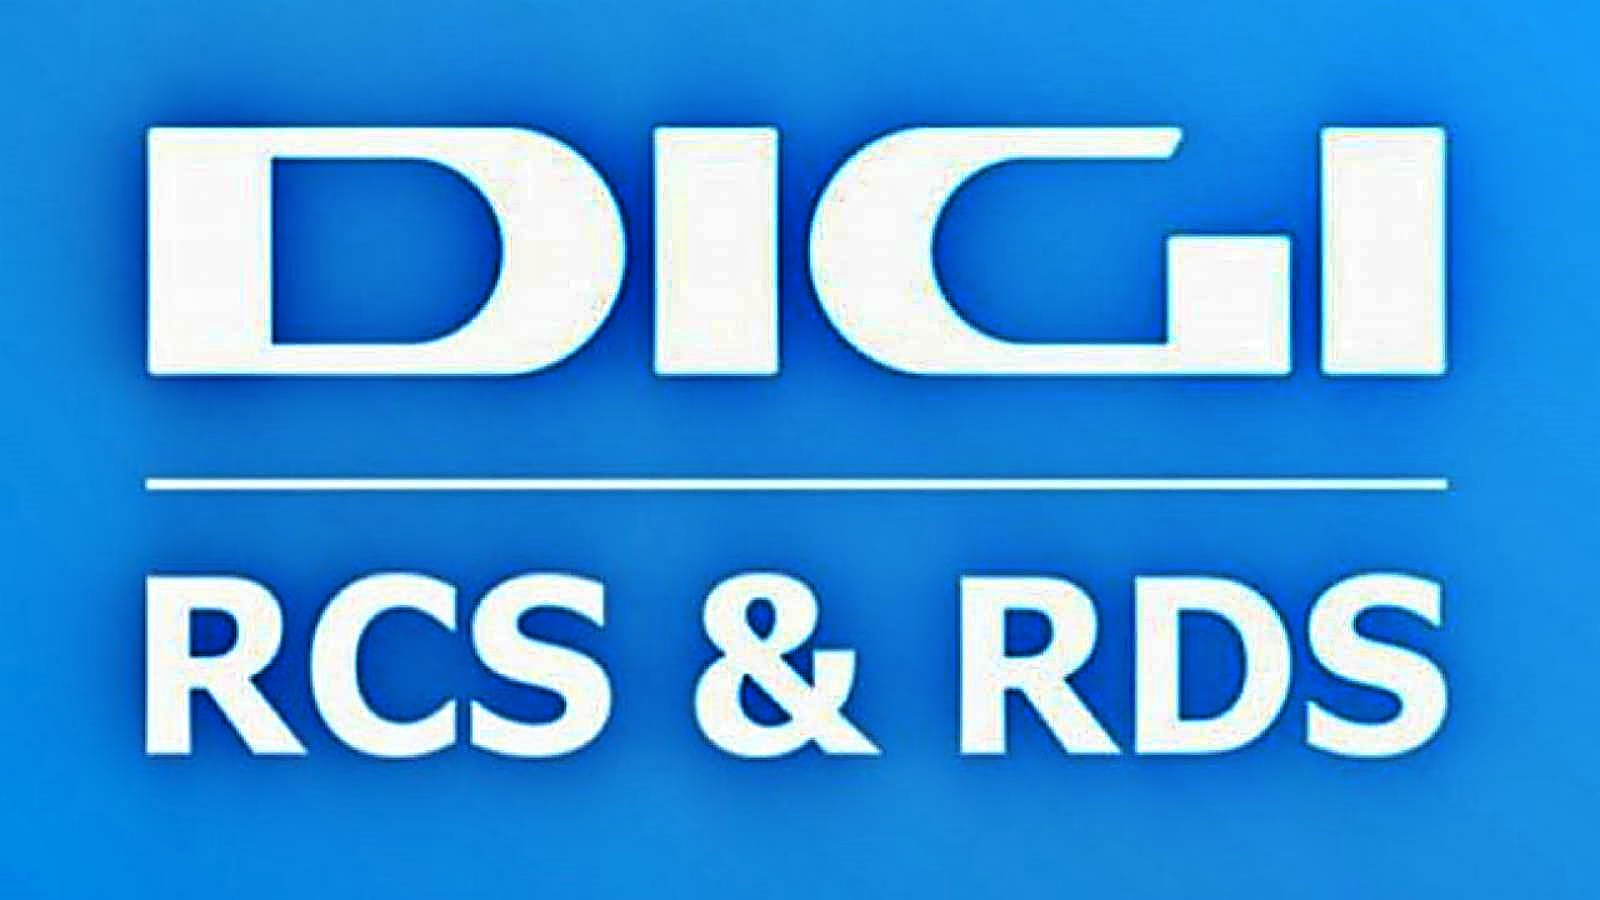 DIGI RCS & RDS Formelle Westen LAST MOMENT Speziell in Rumänien hergestellt